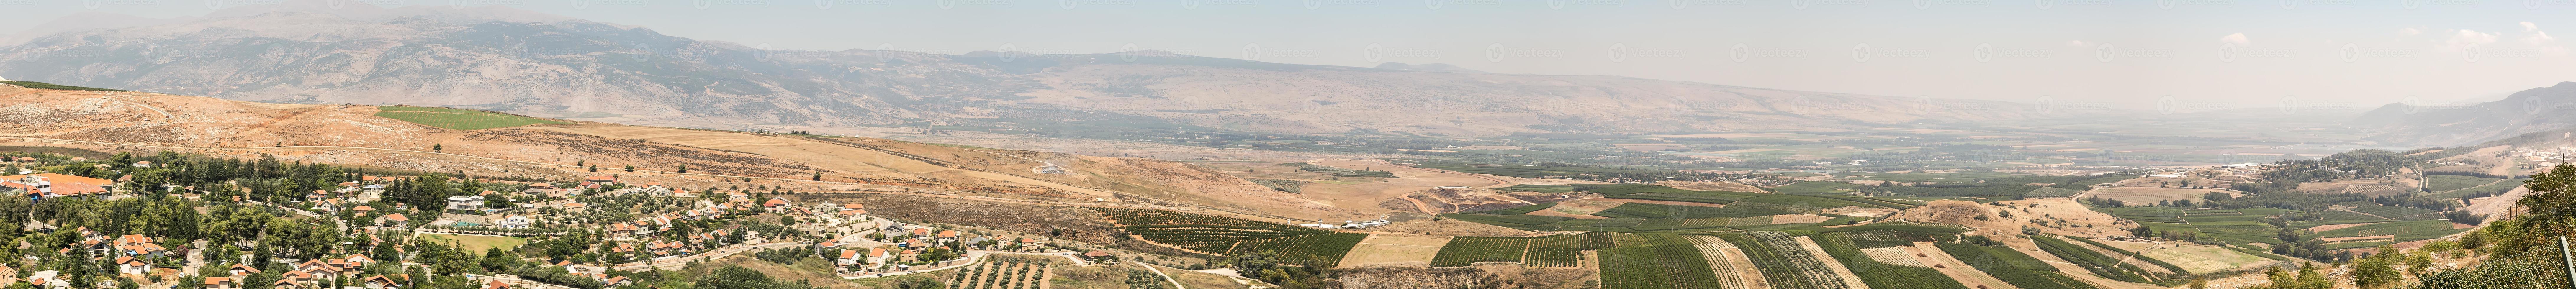 paysage en israël photo